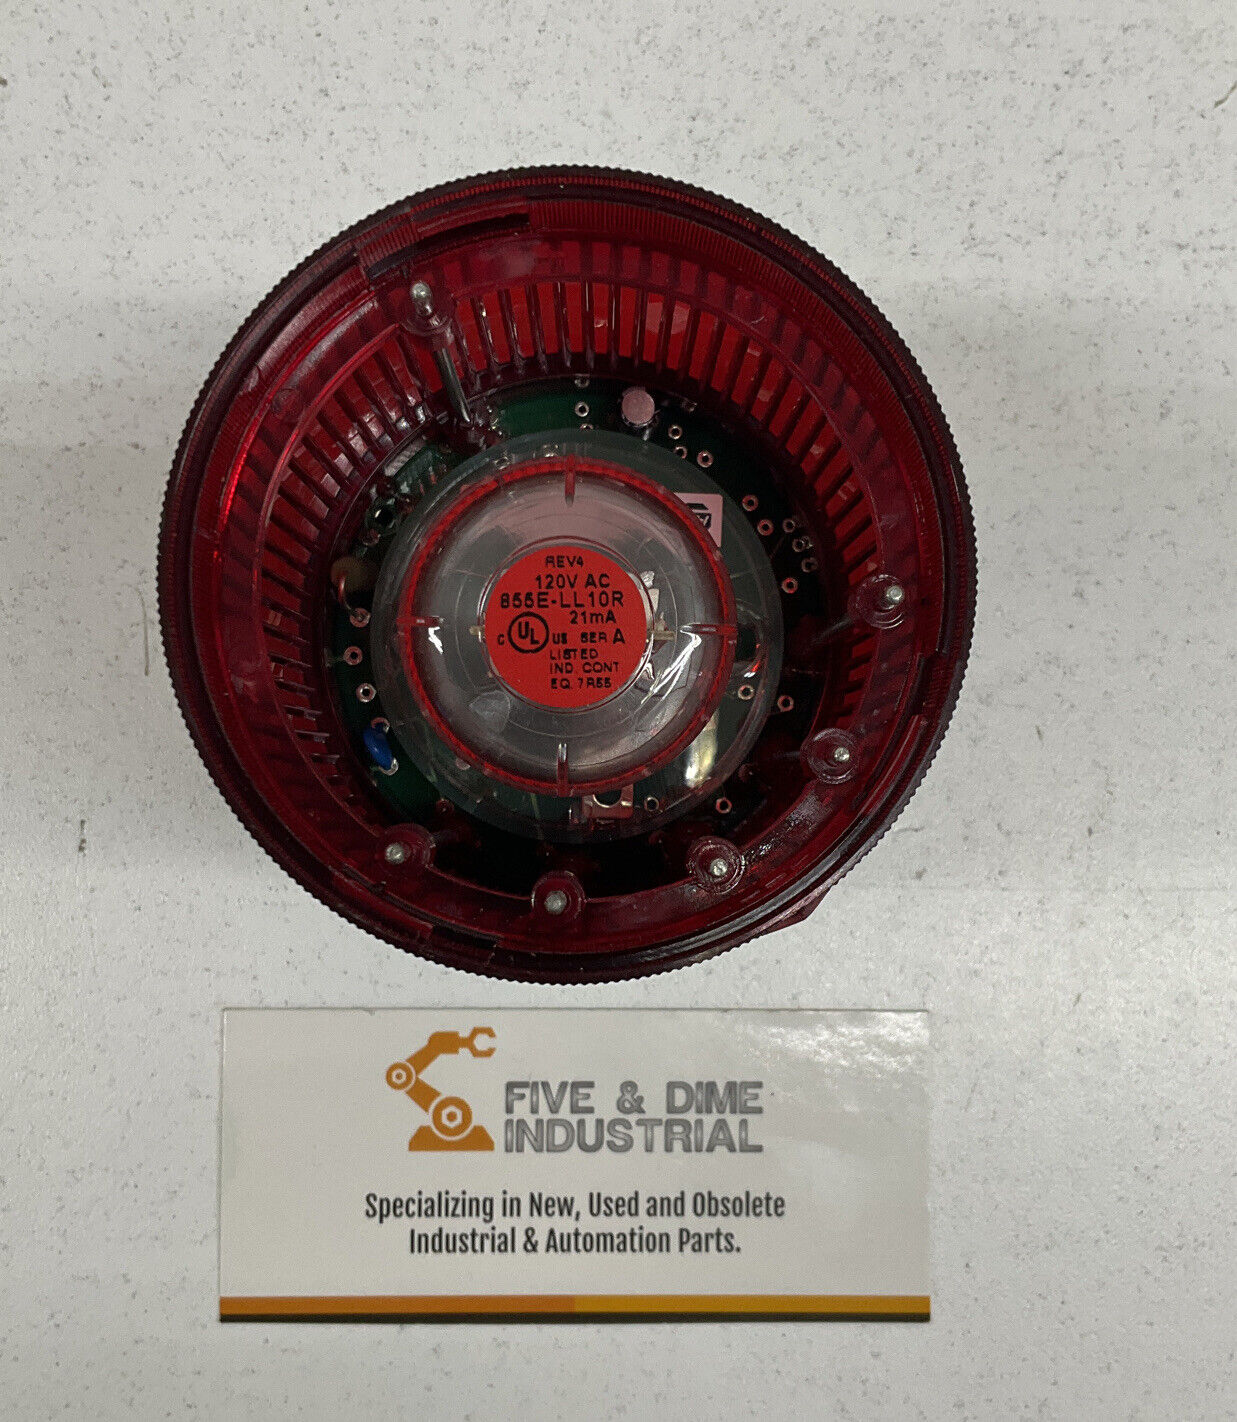 Allen Bradley 855E-B10GL4 New Red Flashing LED Lamp w/ 10" Base 120VAC (GR205)